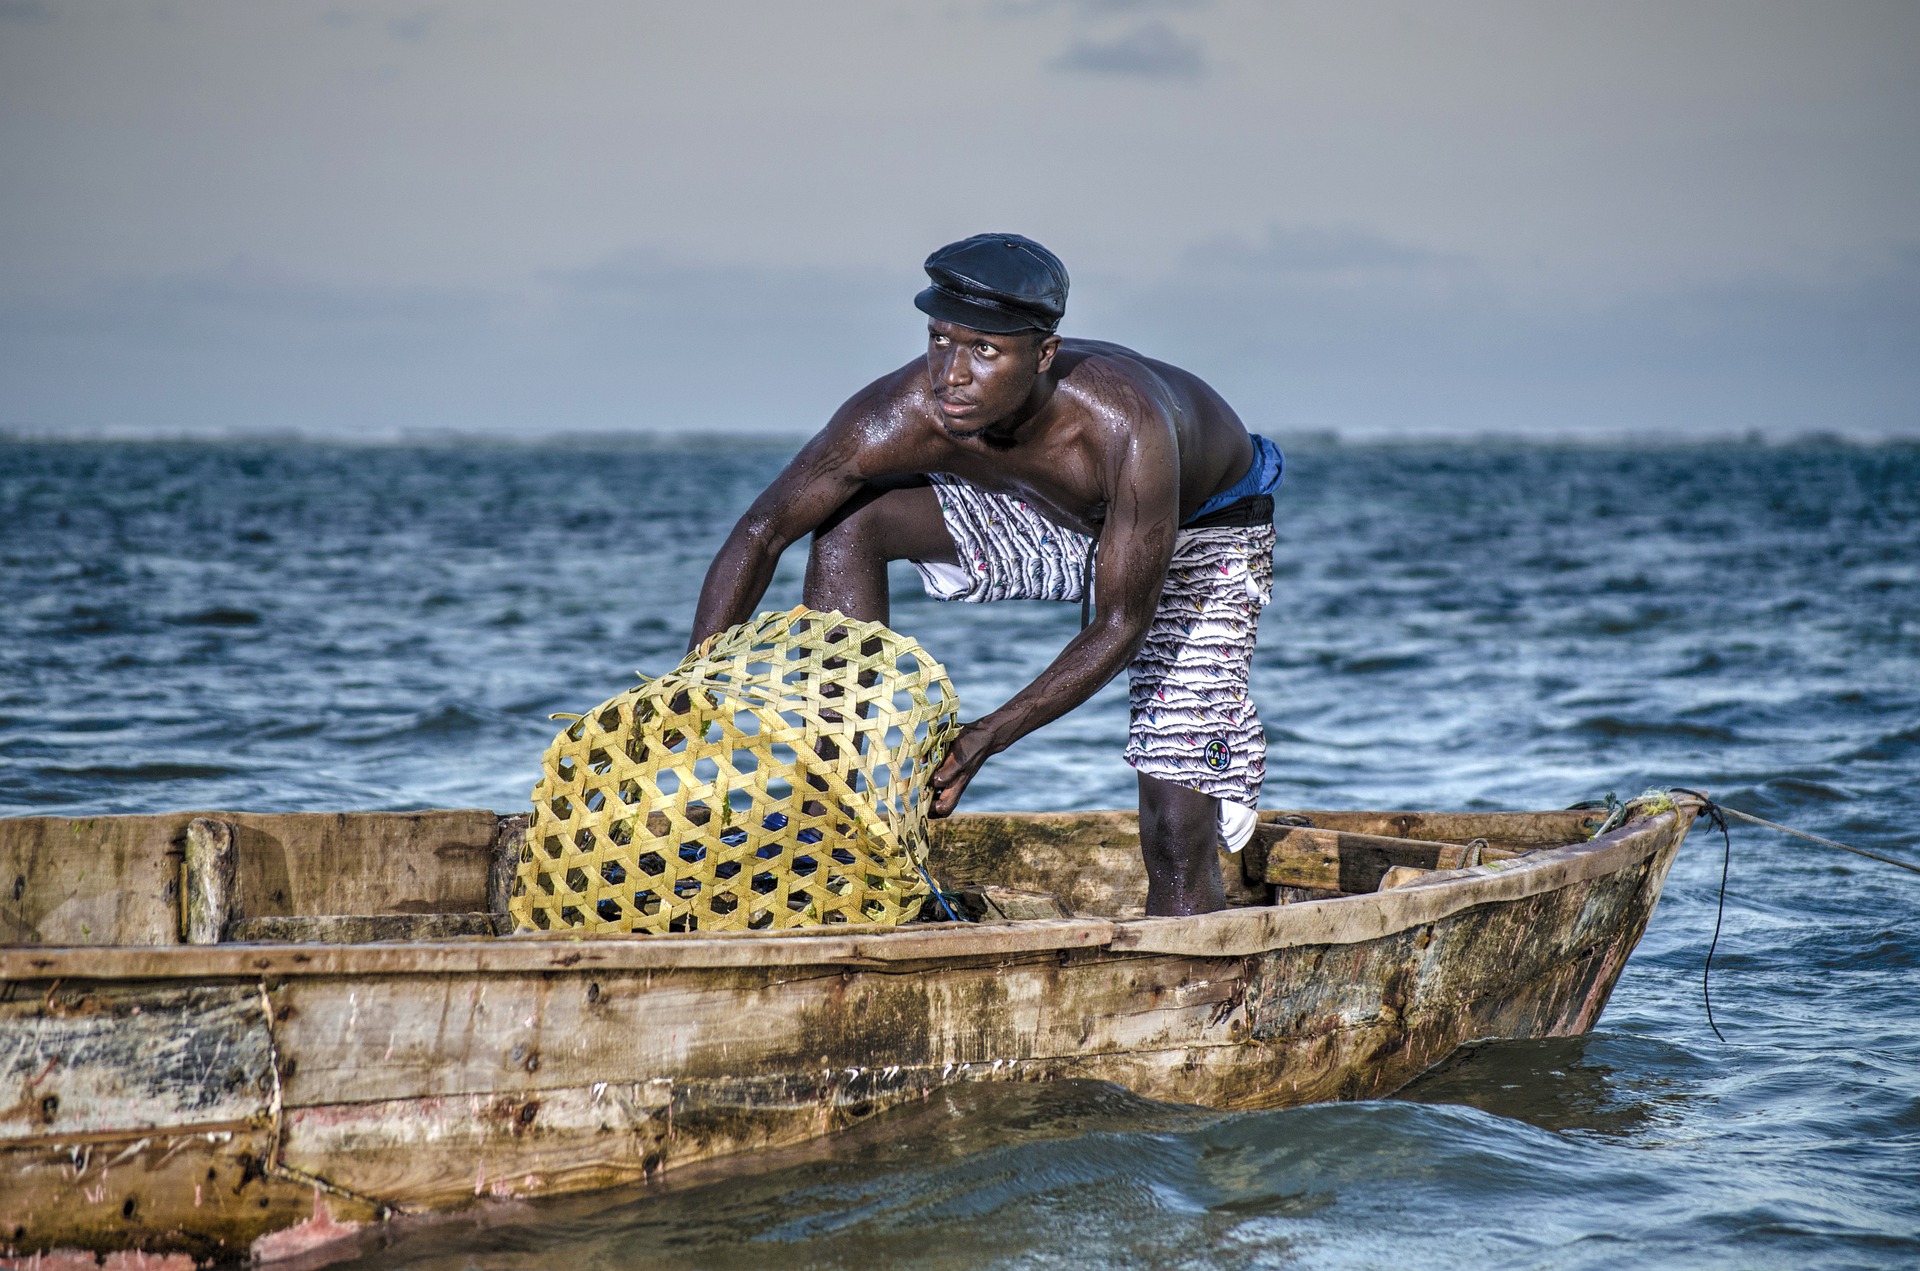 Kenya ratifies key international labour standards for fishers and seafarers